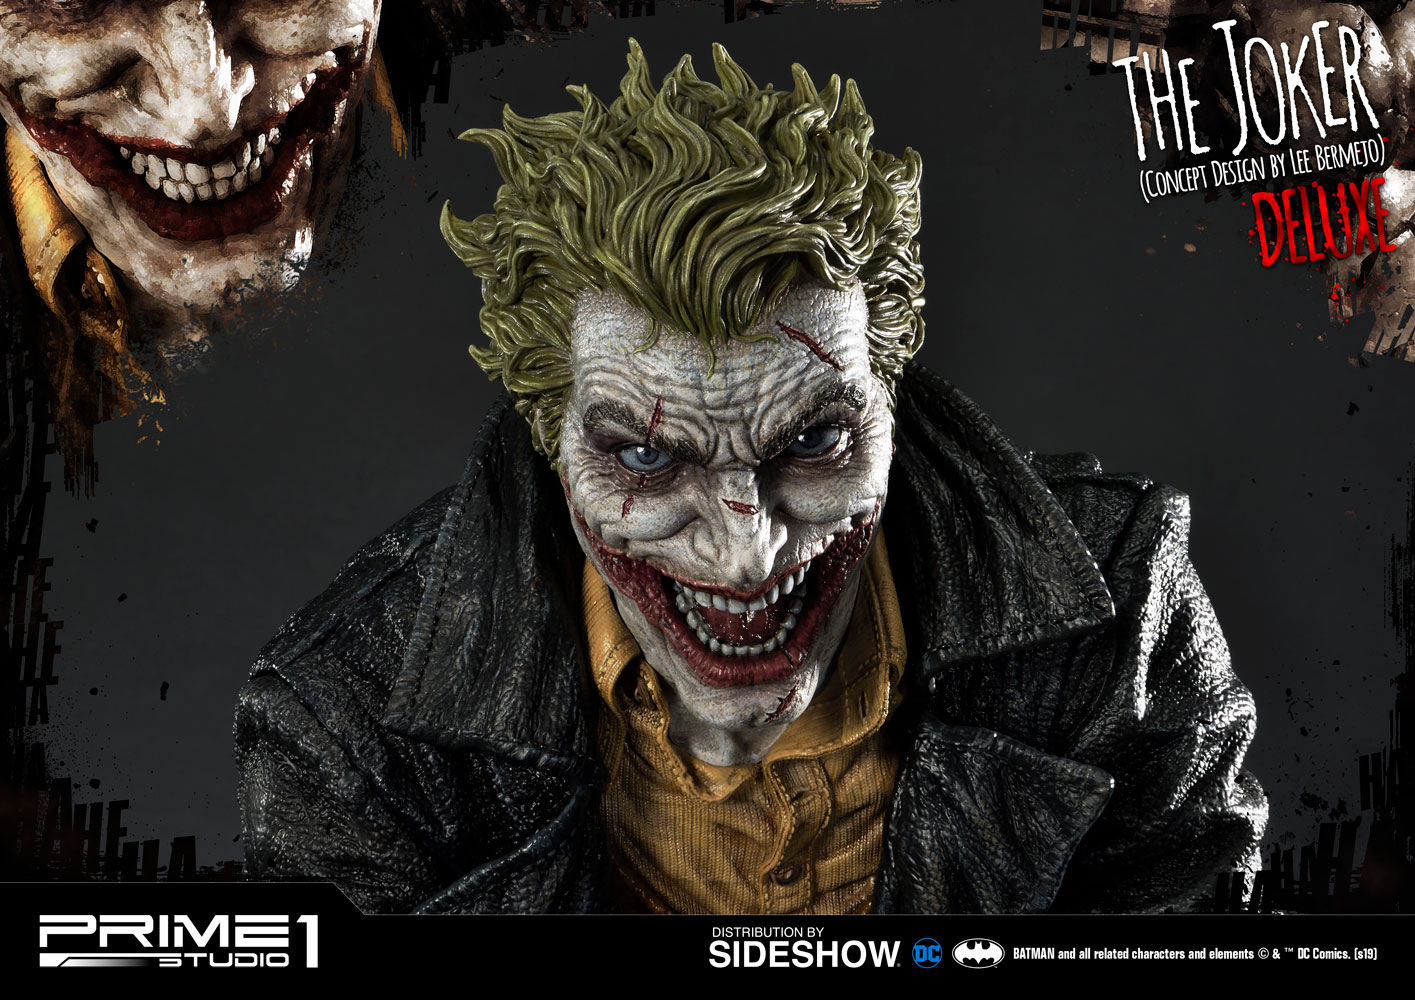 The Joker Deluxe Version (Concept Design by Lee Bermejo) (Prototype Shown) View 11